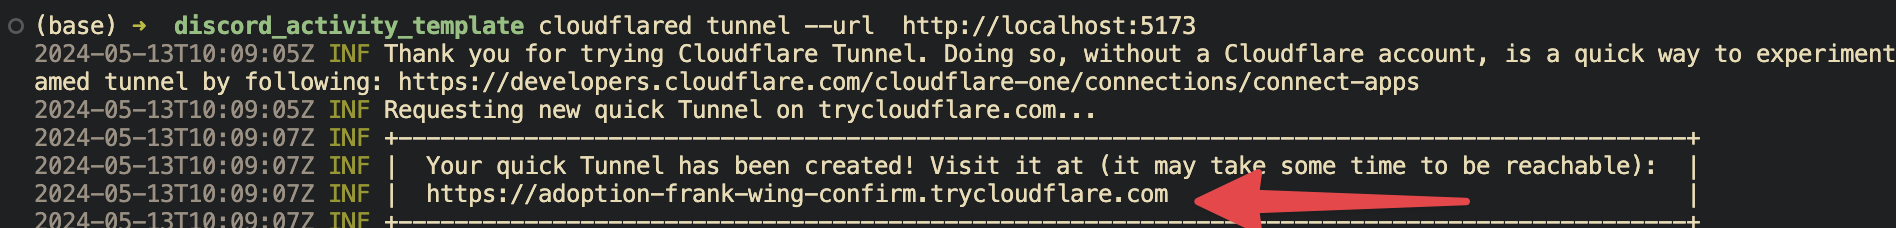 Cloudflare Tunnnel URL